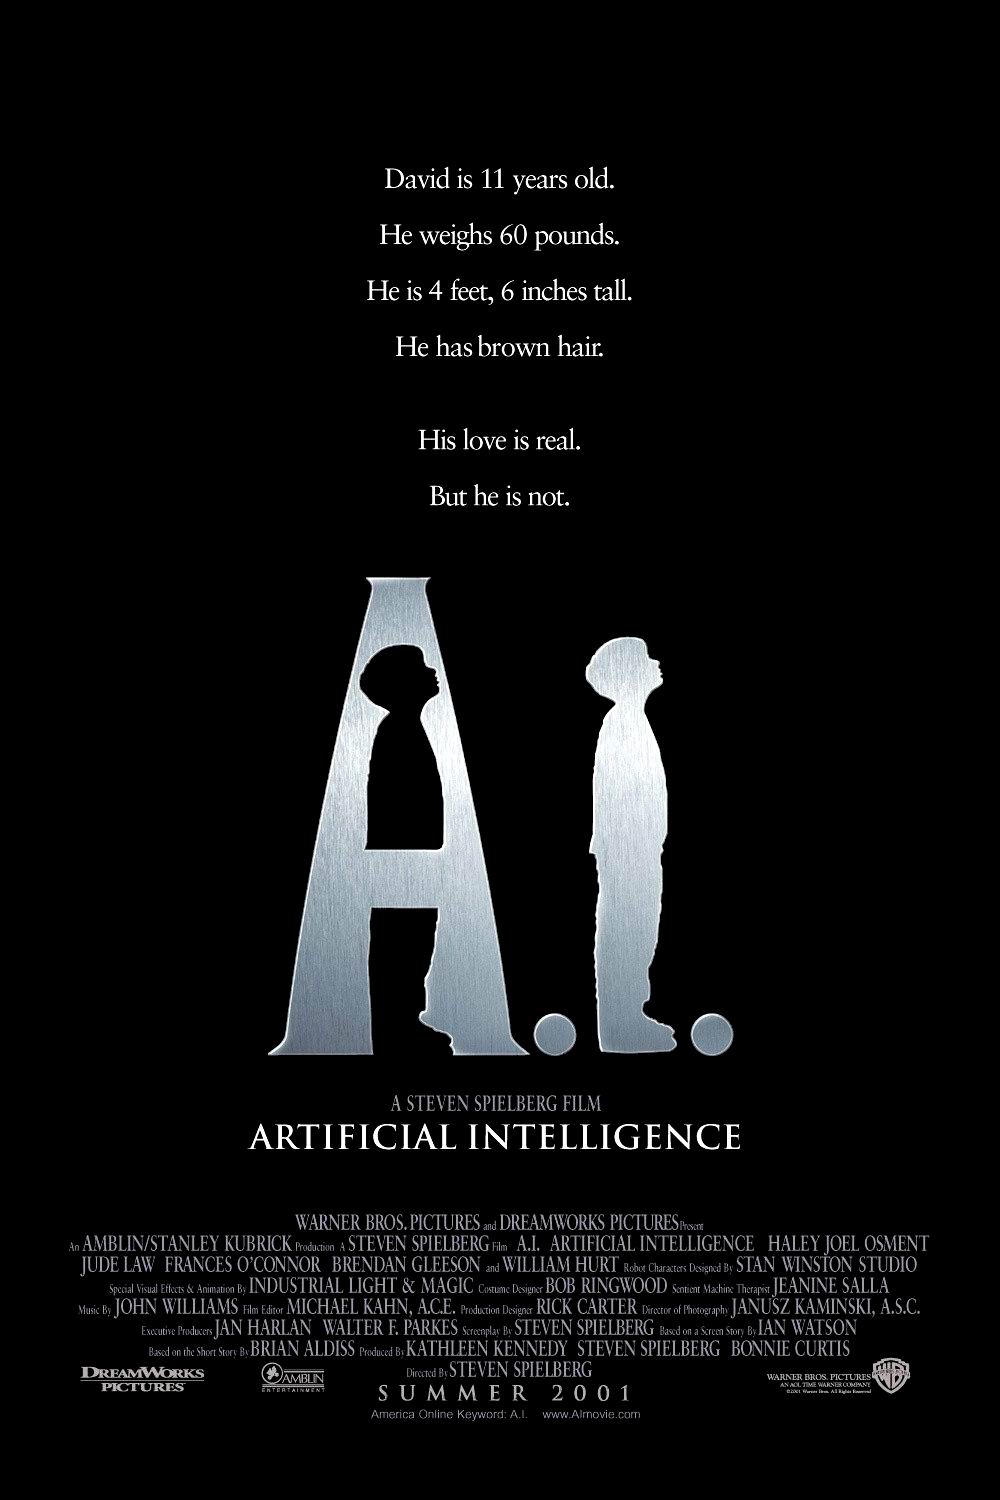 A. I. : Intelligence artificielle (2000) Steven Spielberg - A. I. : Artificial intelligence